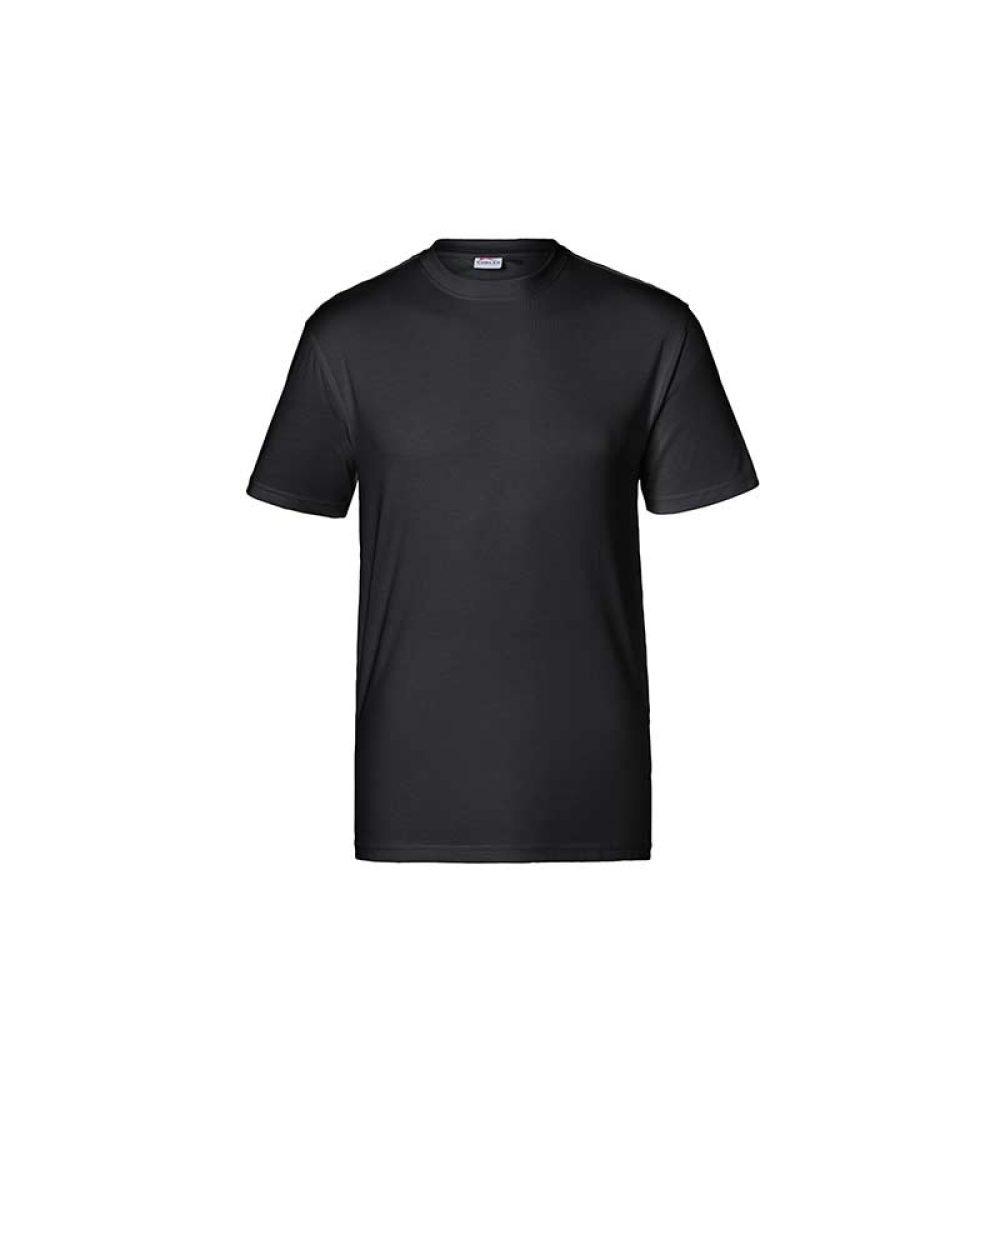 kuebler-t-shirt-shirts-5124-6538-99